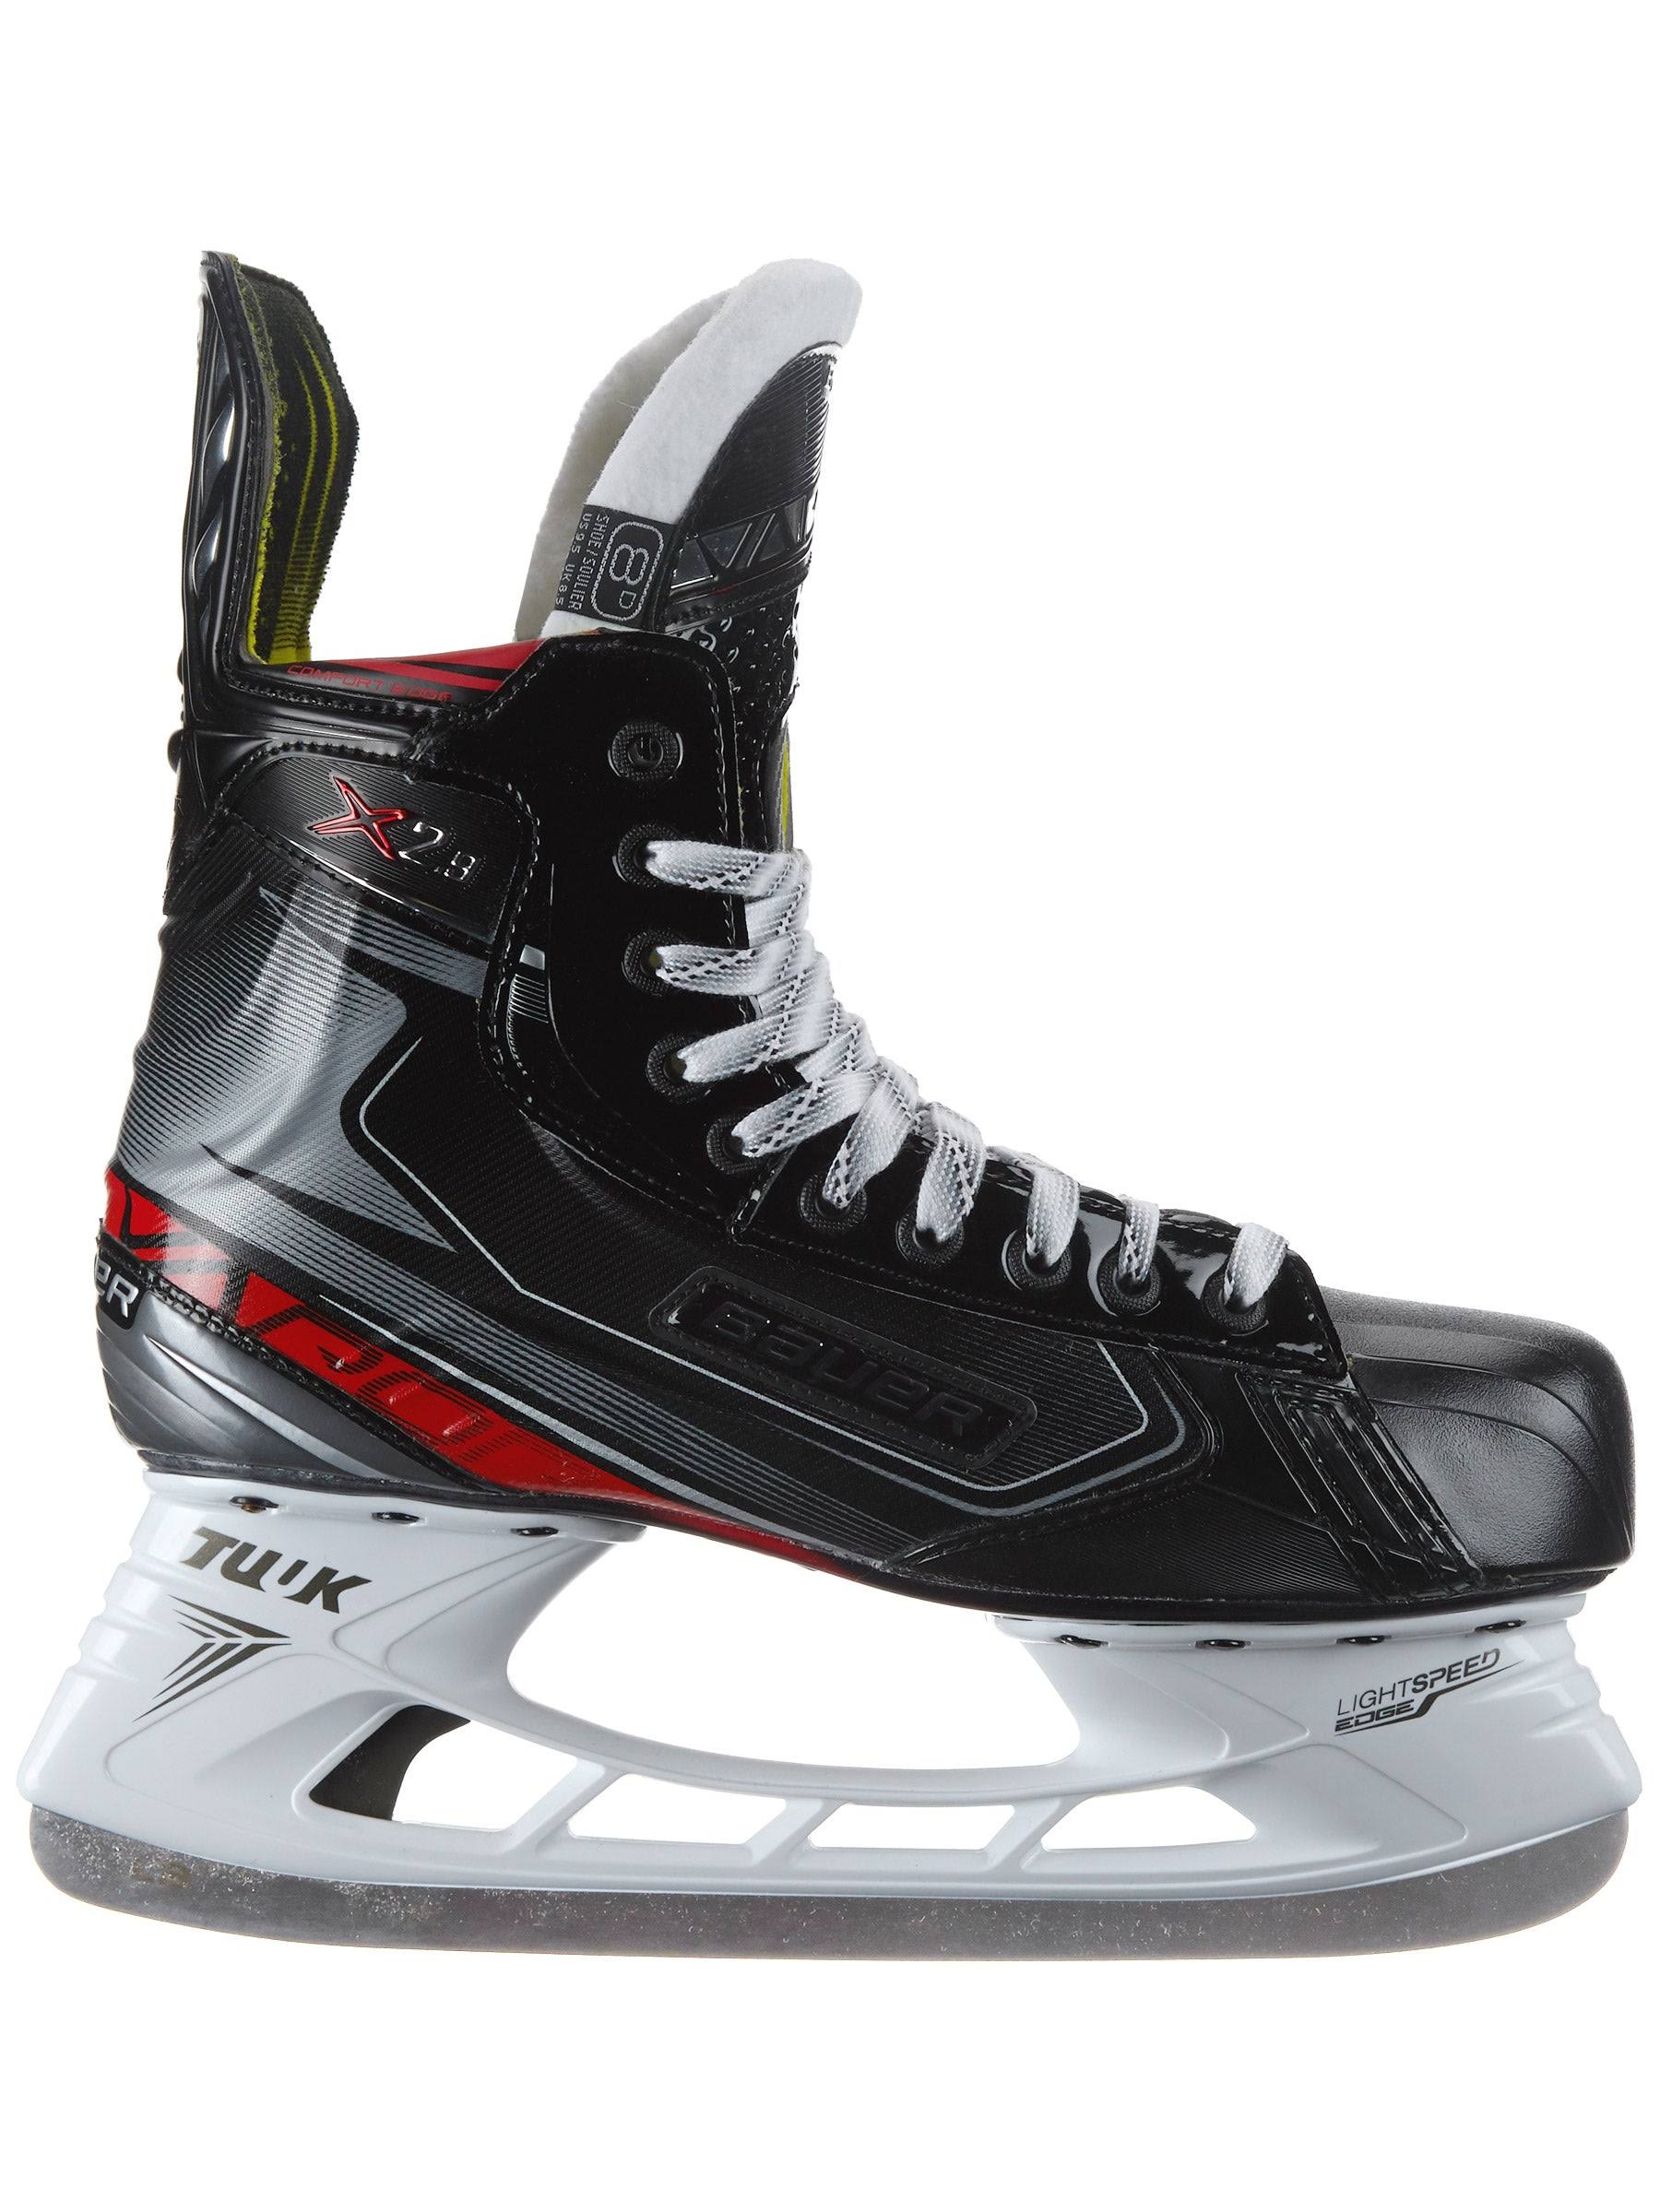 Bauer Vapor X2.9 Ice Hockey Skates - Senior